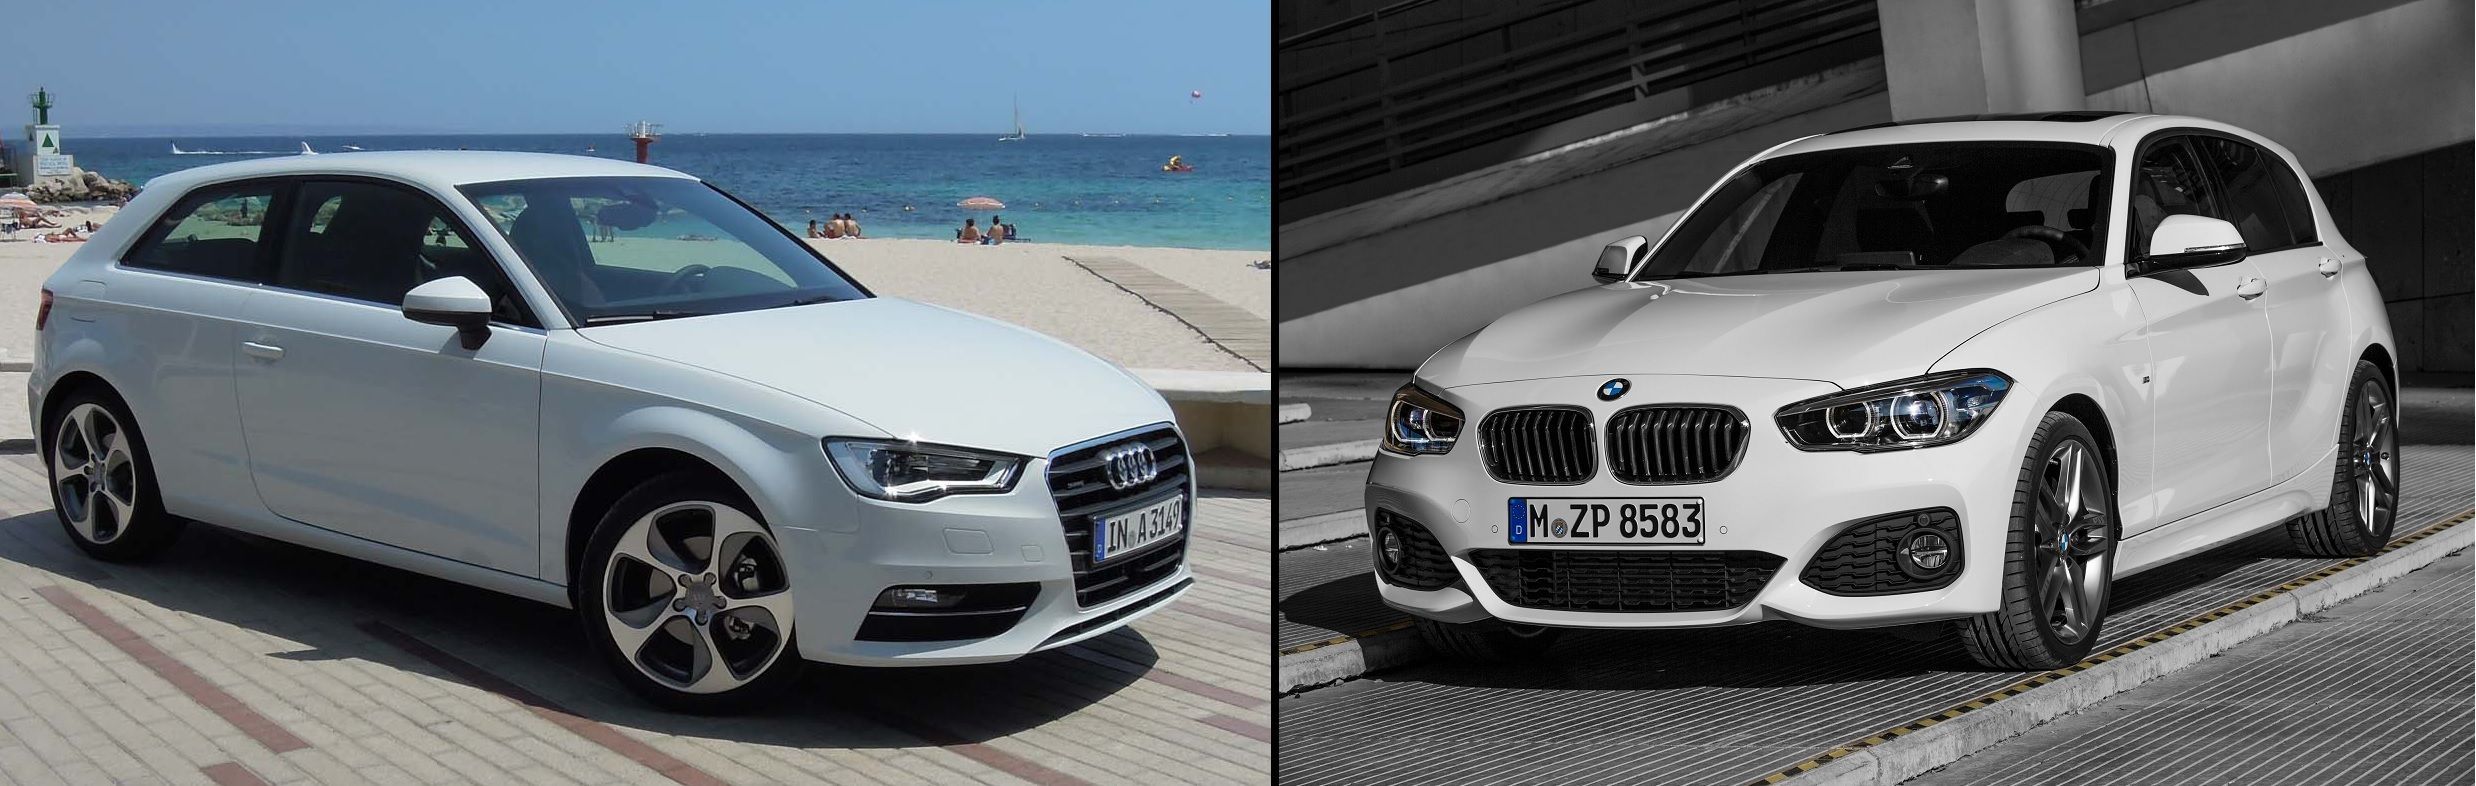 Audi A3 vs BMW Serie 1